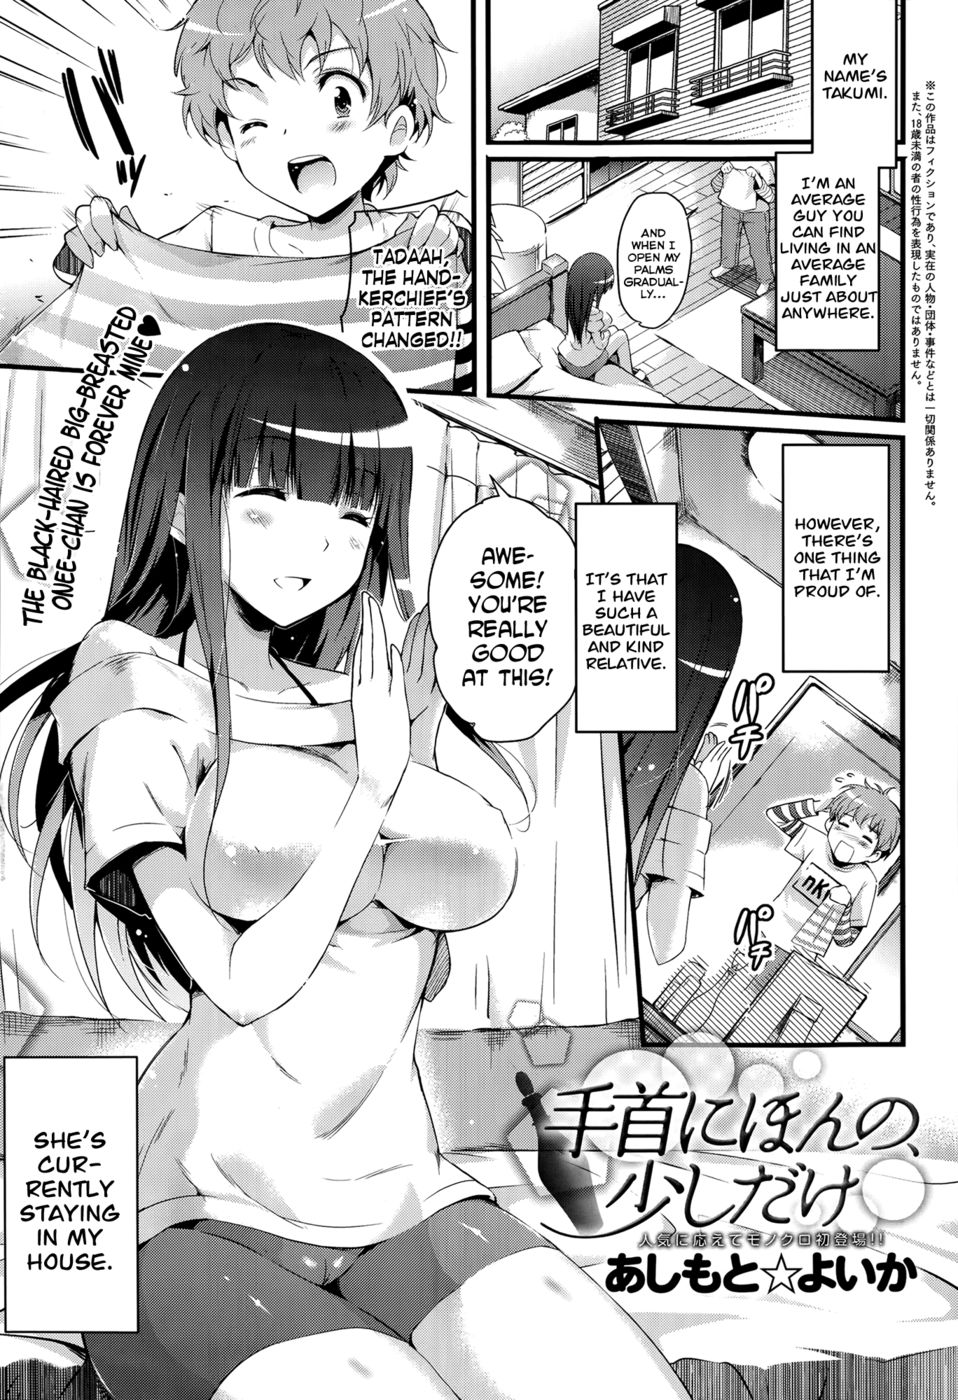 Small Penis Humiliation Manga.